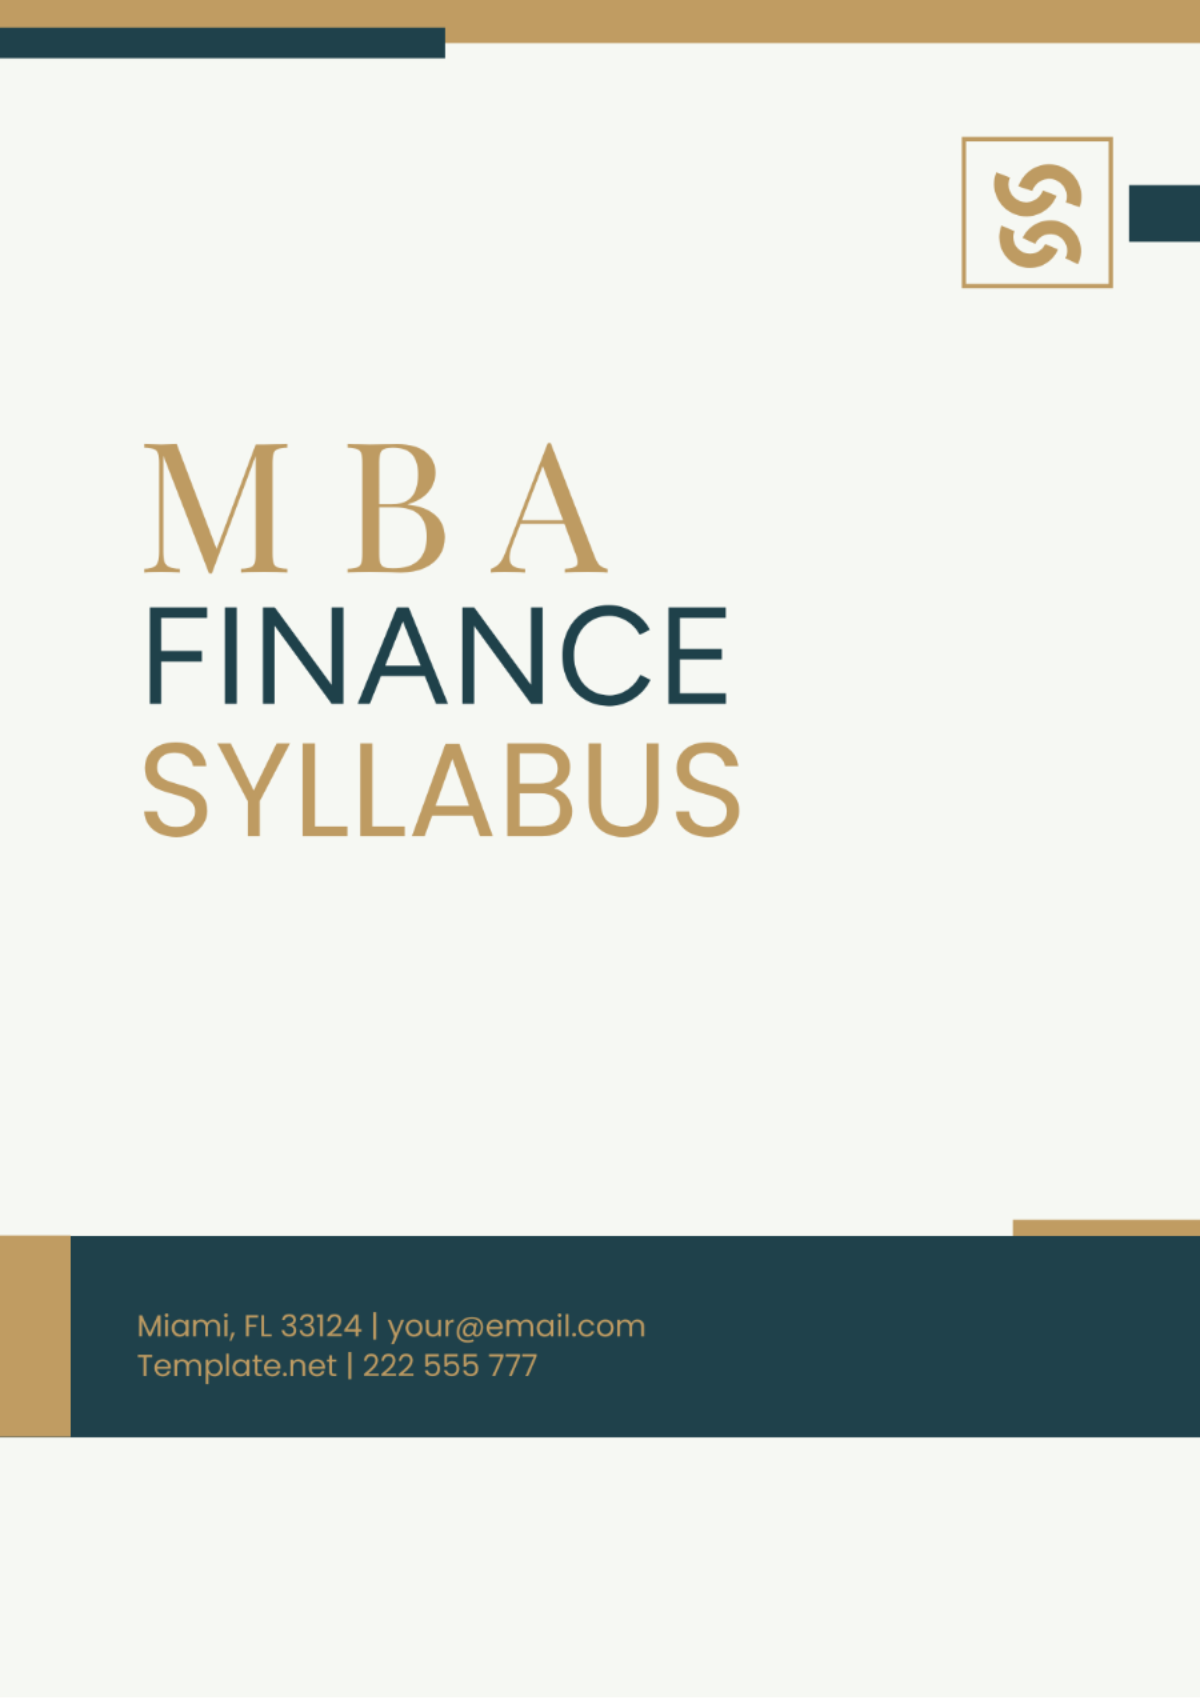 Free MBA Finance Syllabus Template